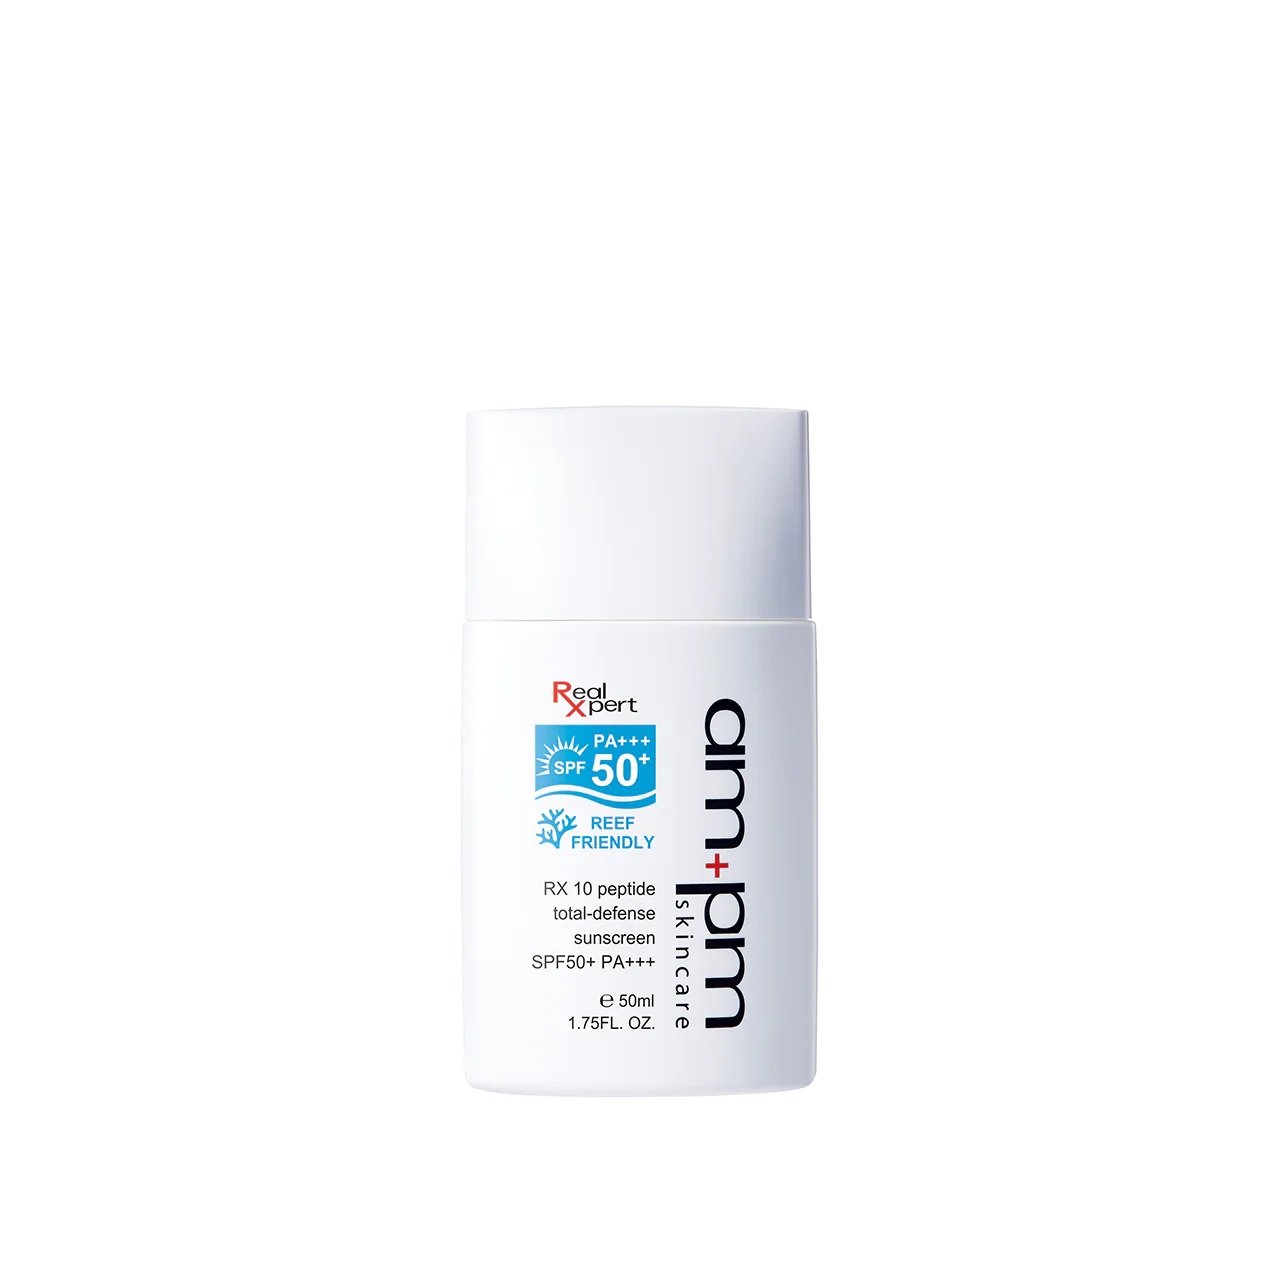 Ampm RX10 Peptide Total-Defense Sunscreen SPF50+ PA+++ (Reef friendly)